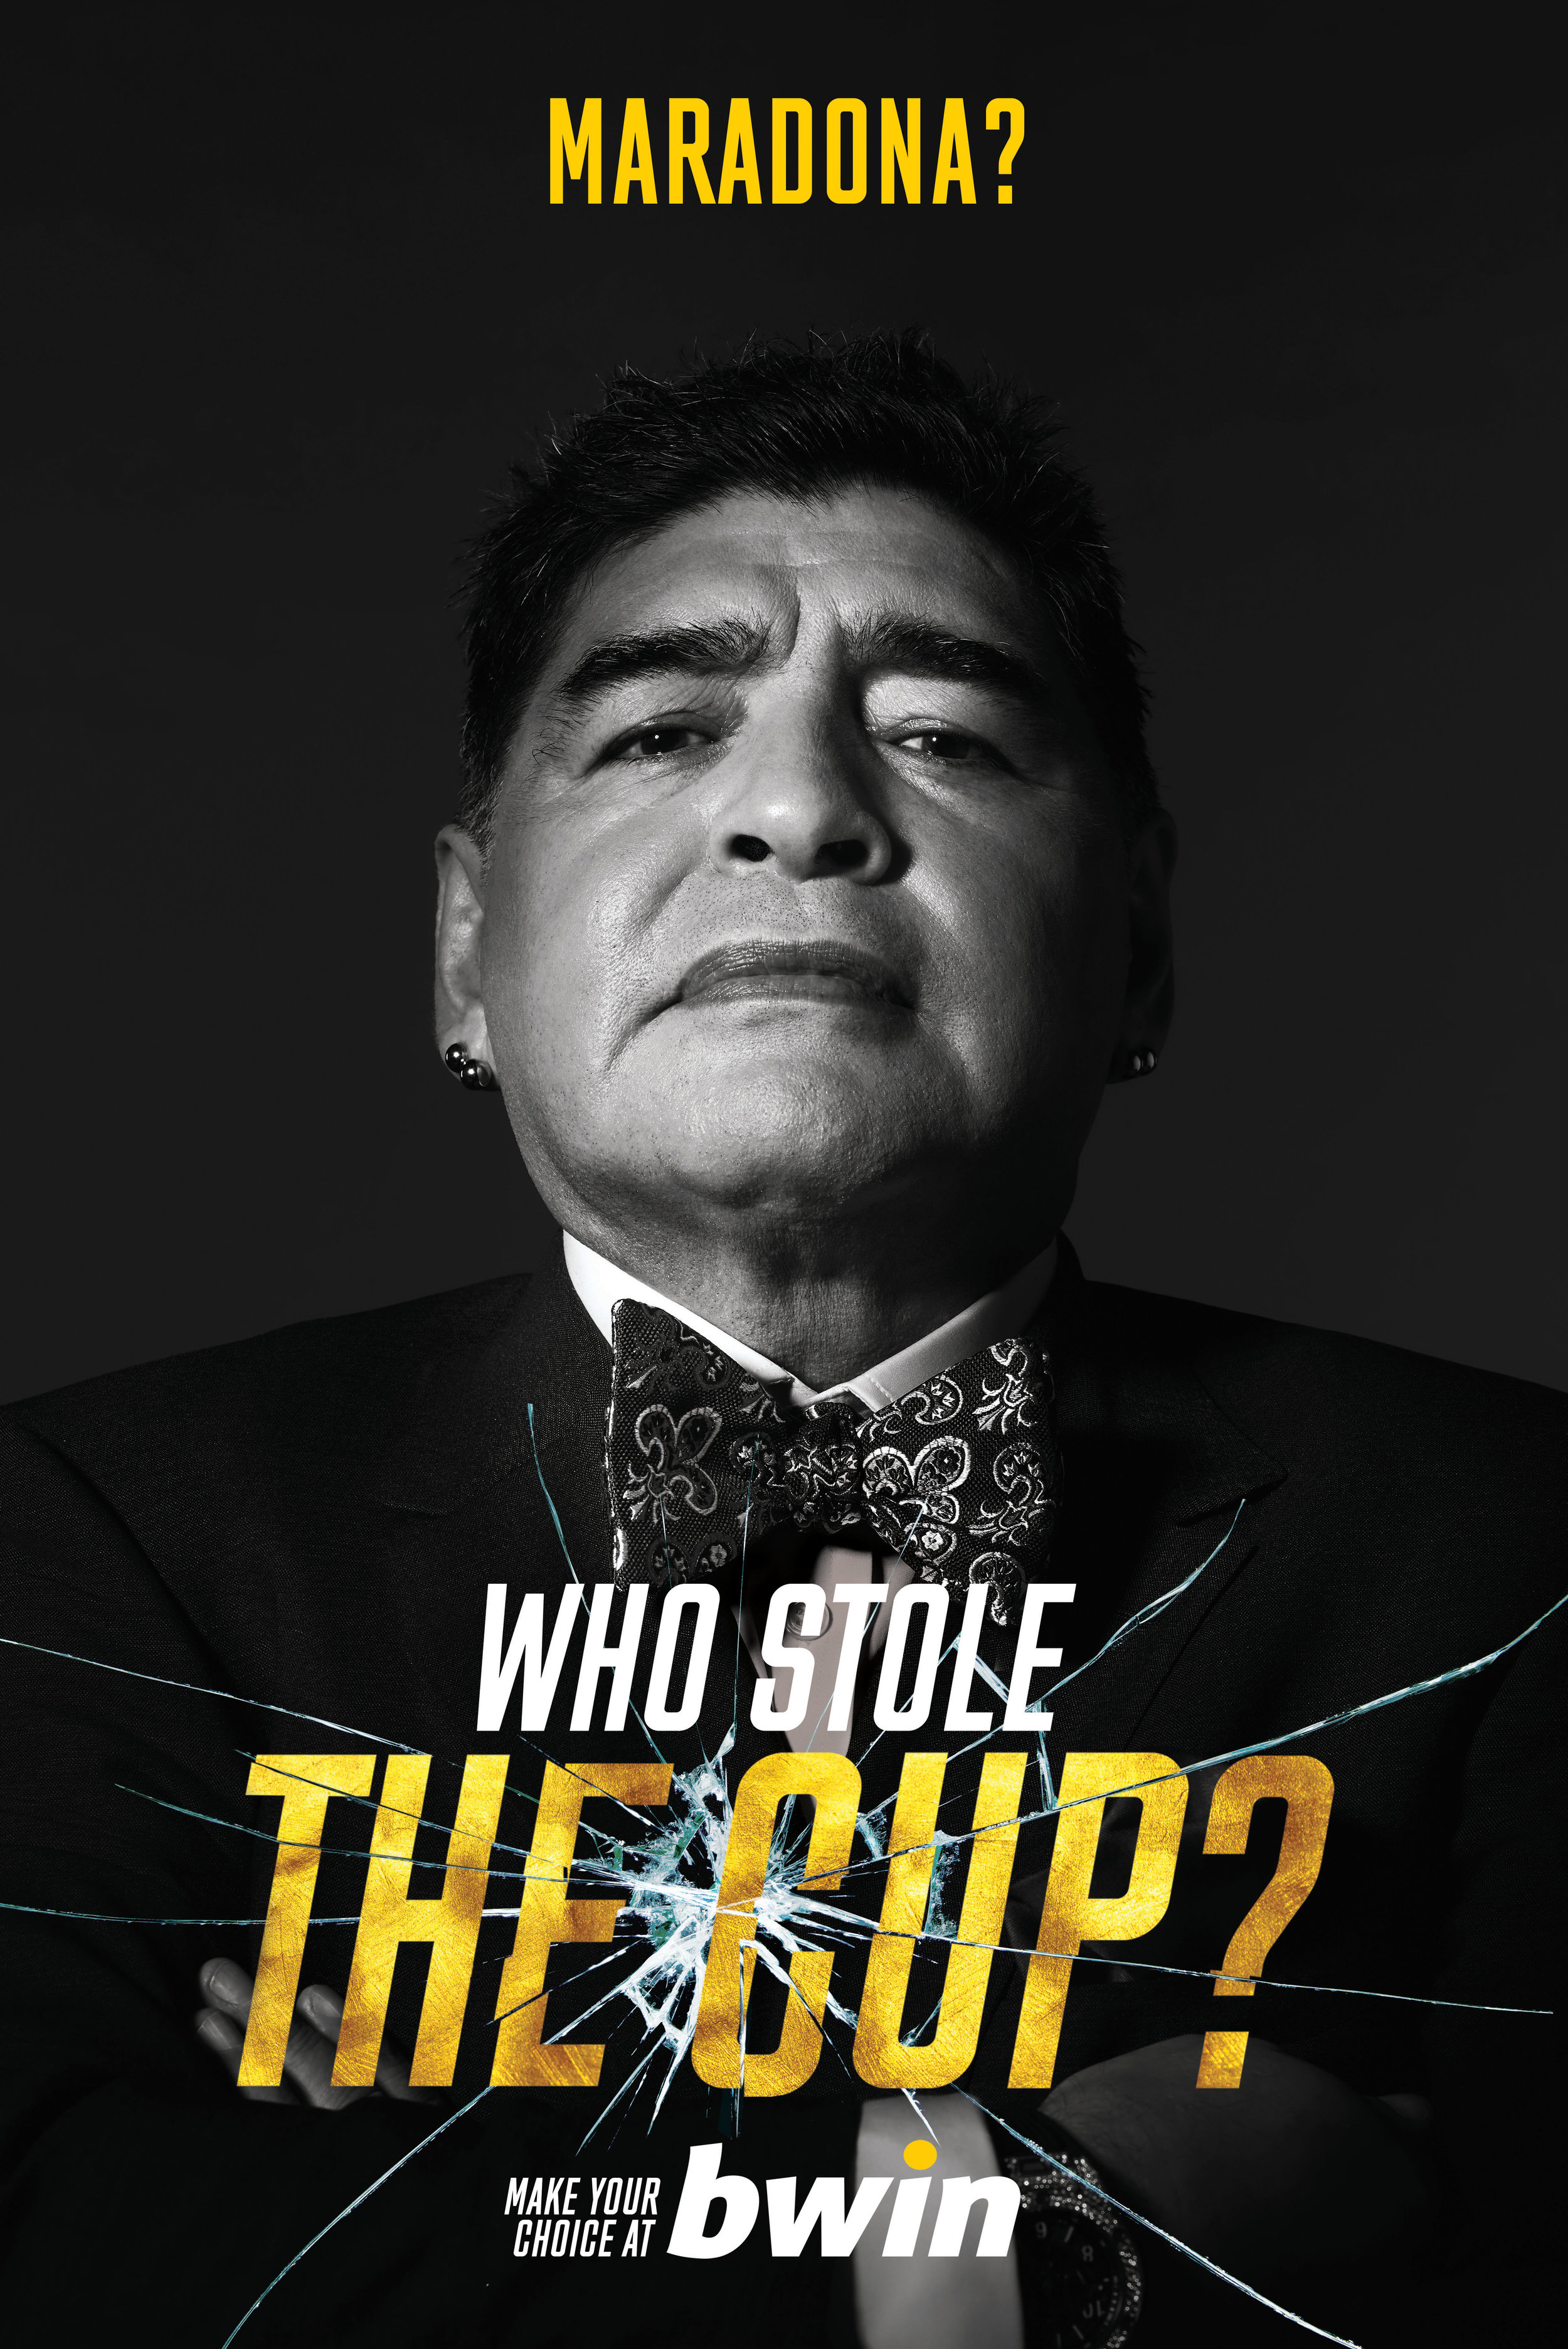 Maradona portrait.jpg